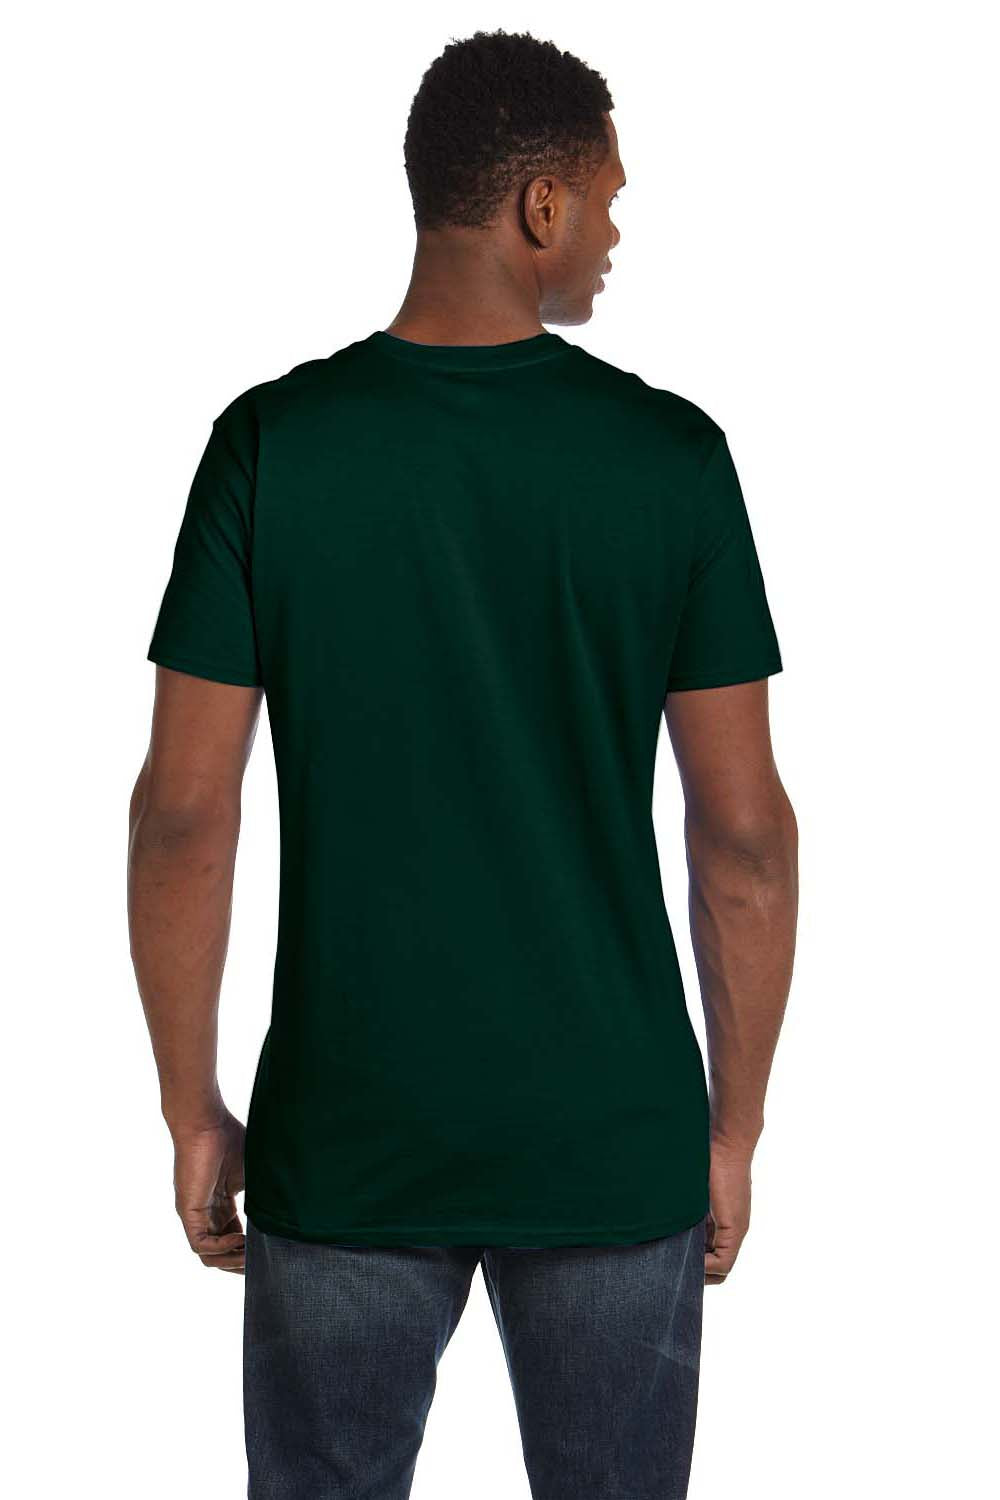 Hanes 4980 Mens Nano-T Short Sleeve Crewneck T-Shirt Forest Green Back